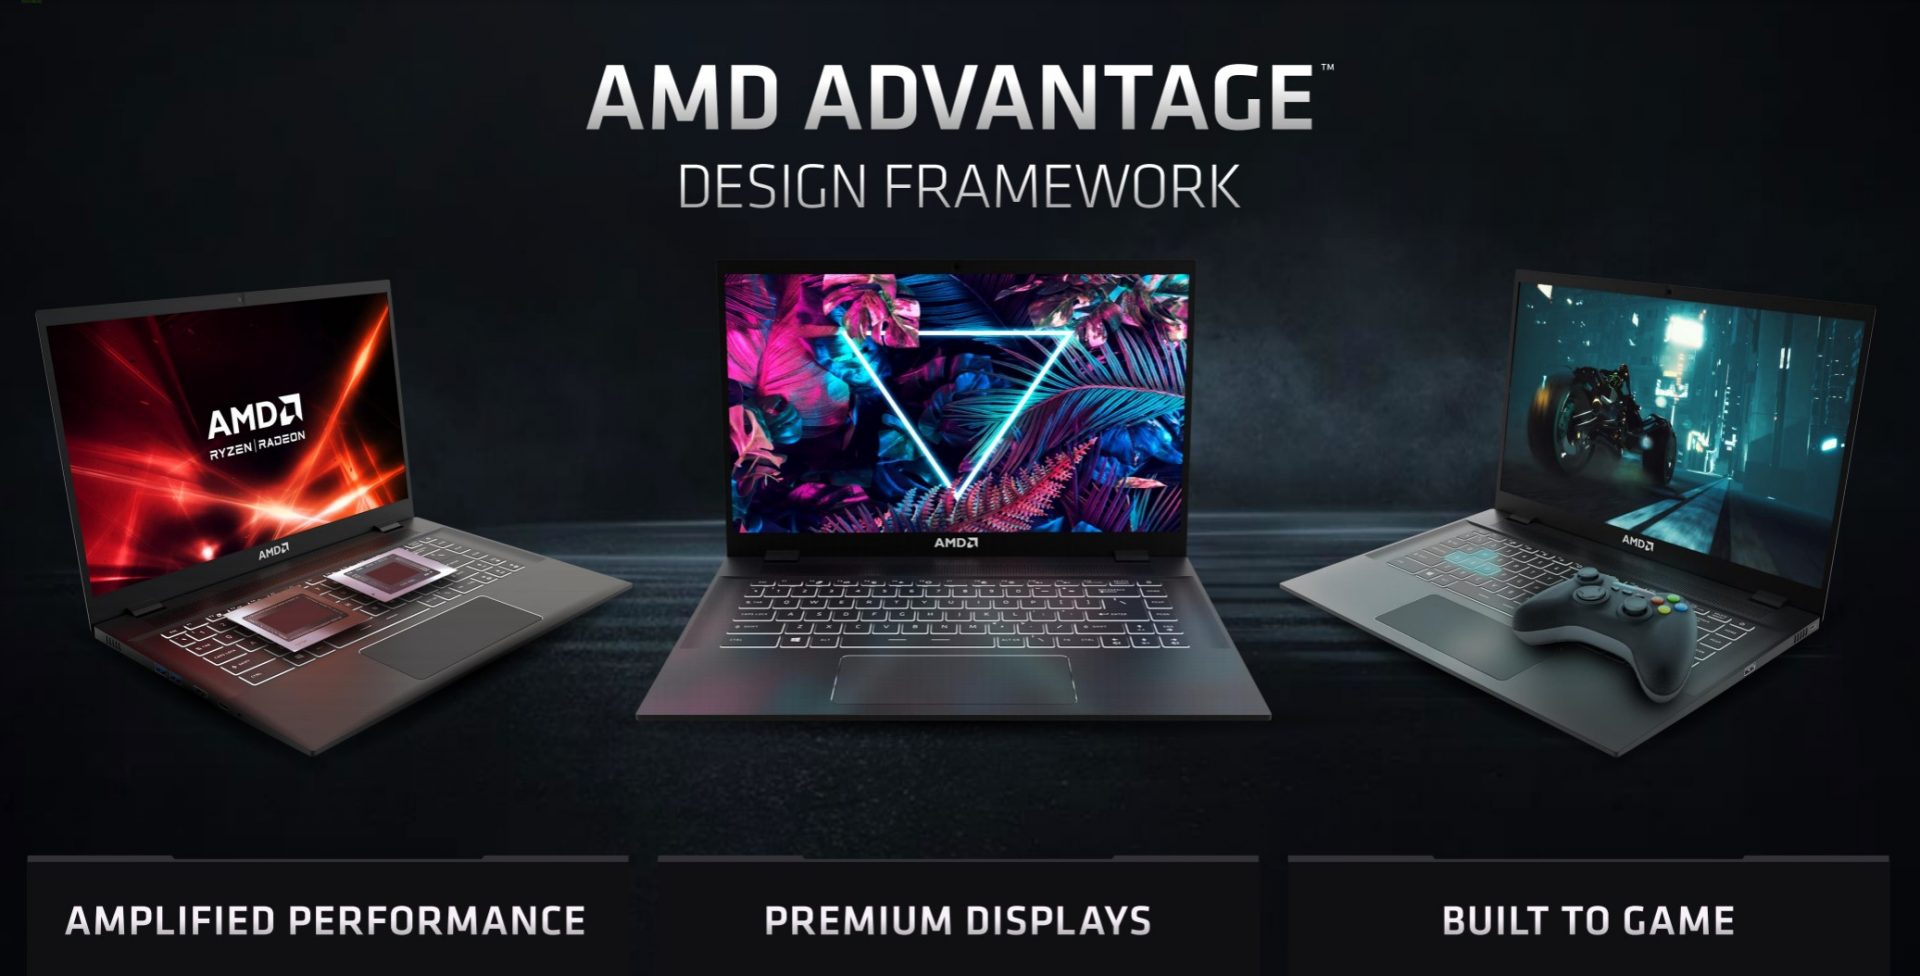 AMD-Design-Framework-1920x976.jpg